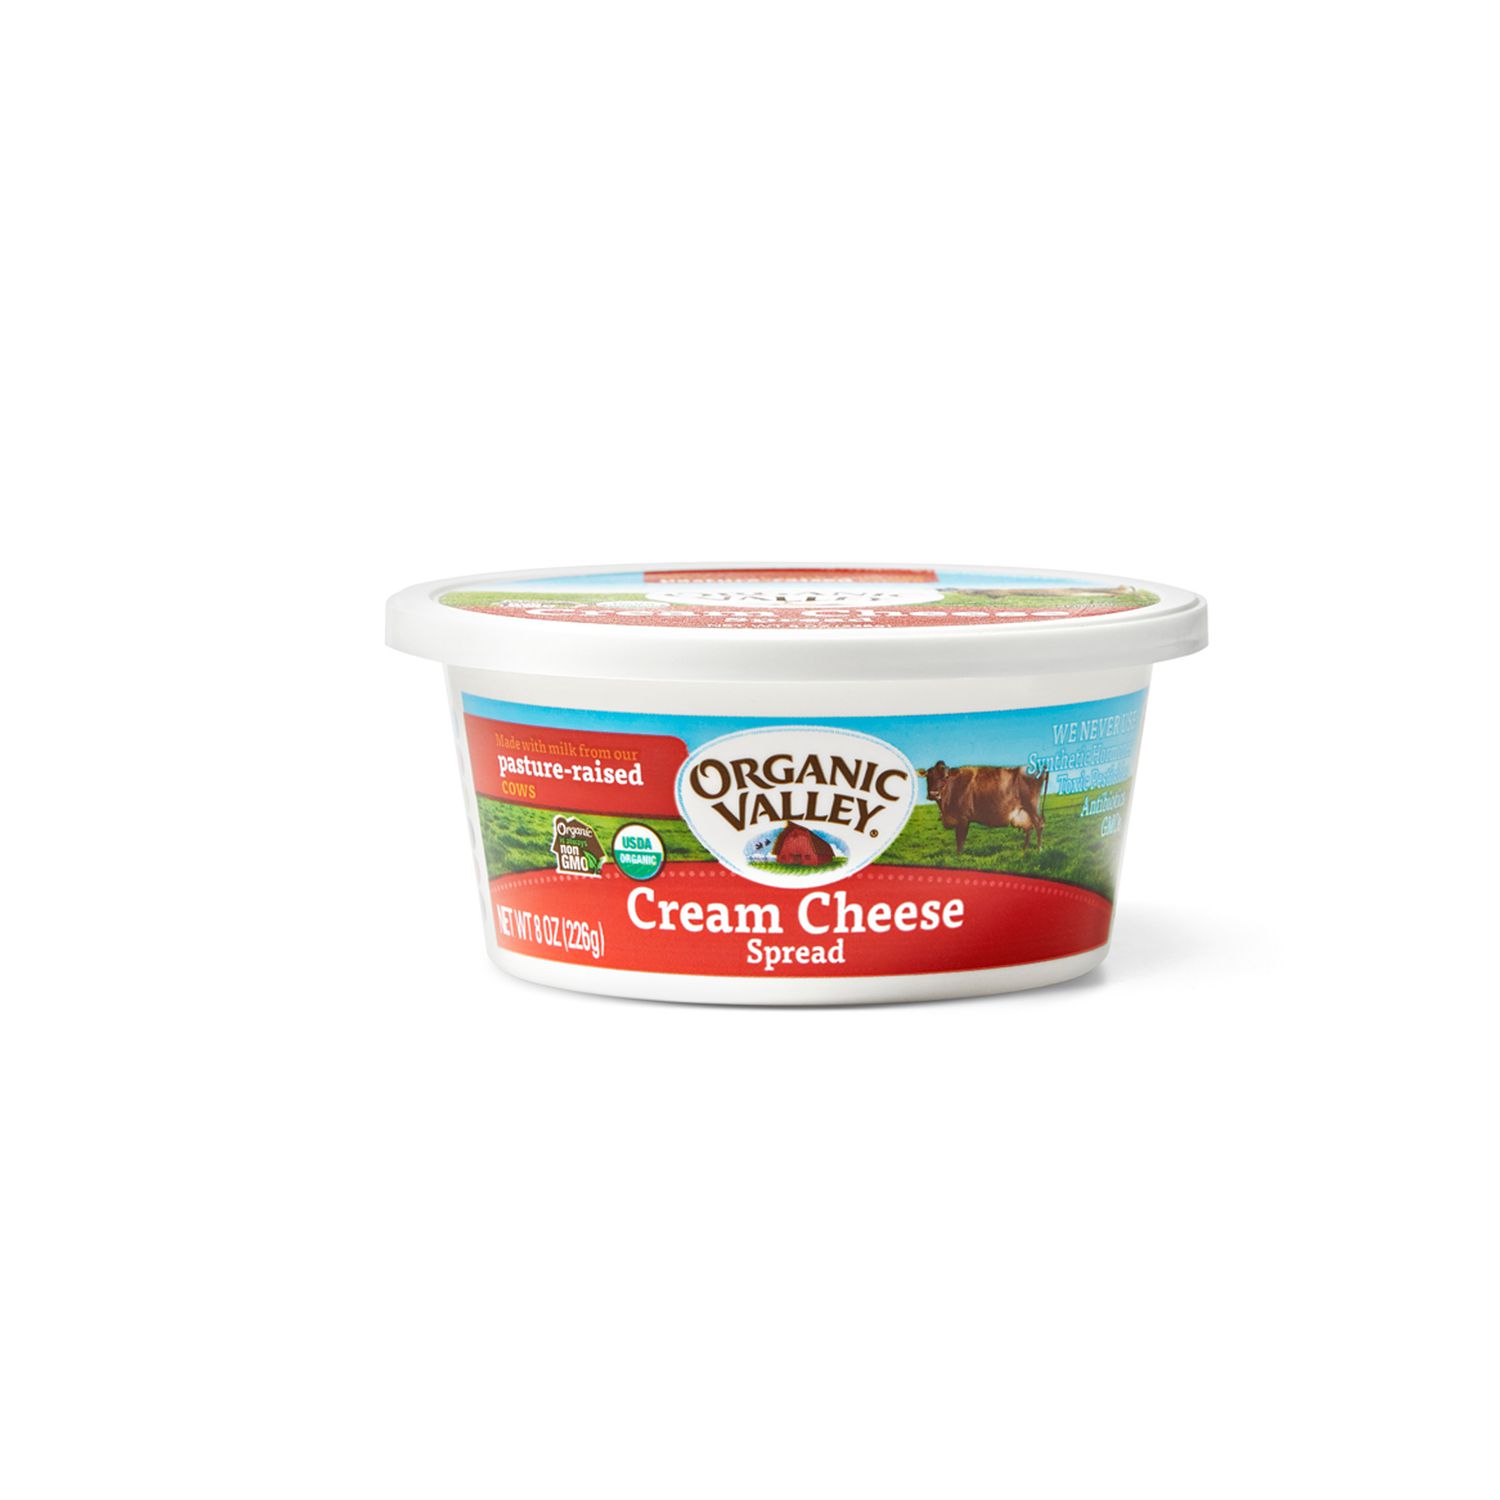 Organic Valley cream cheese